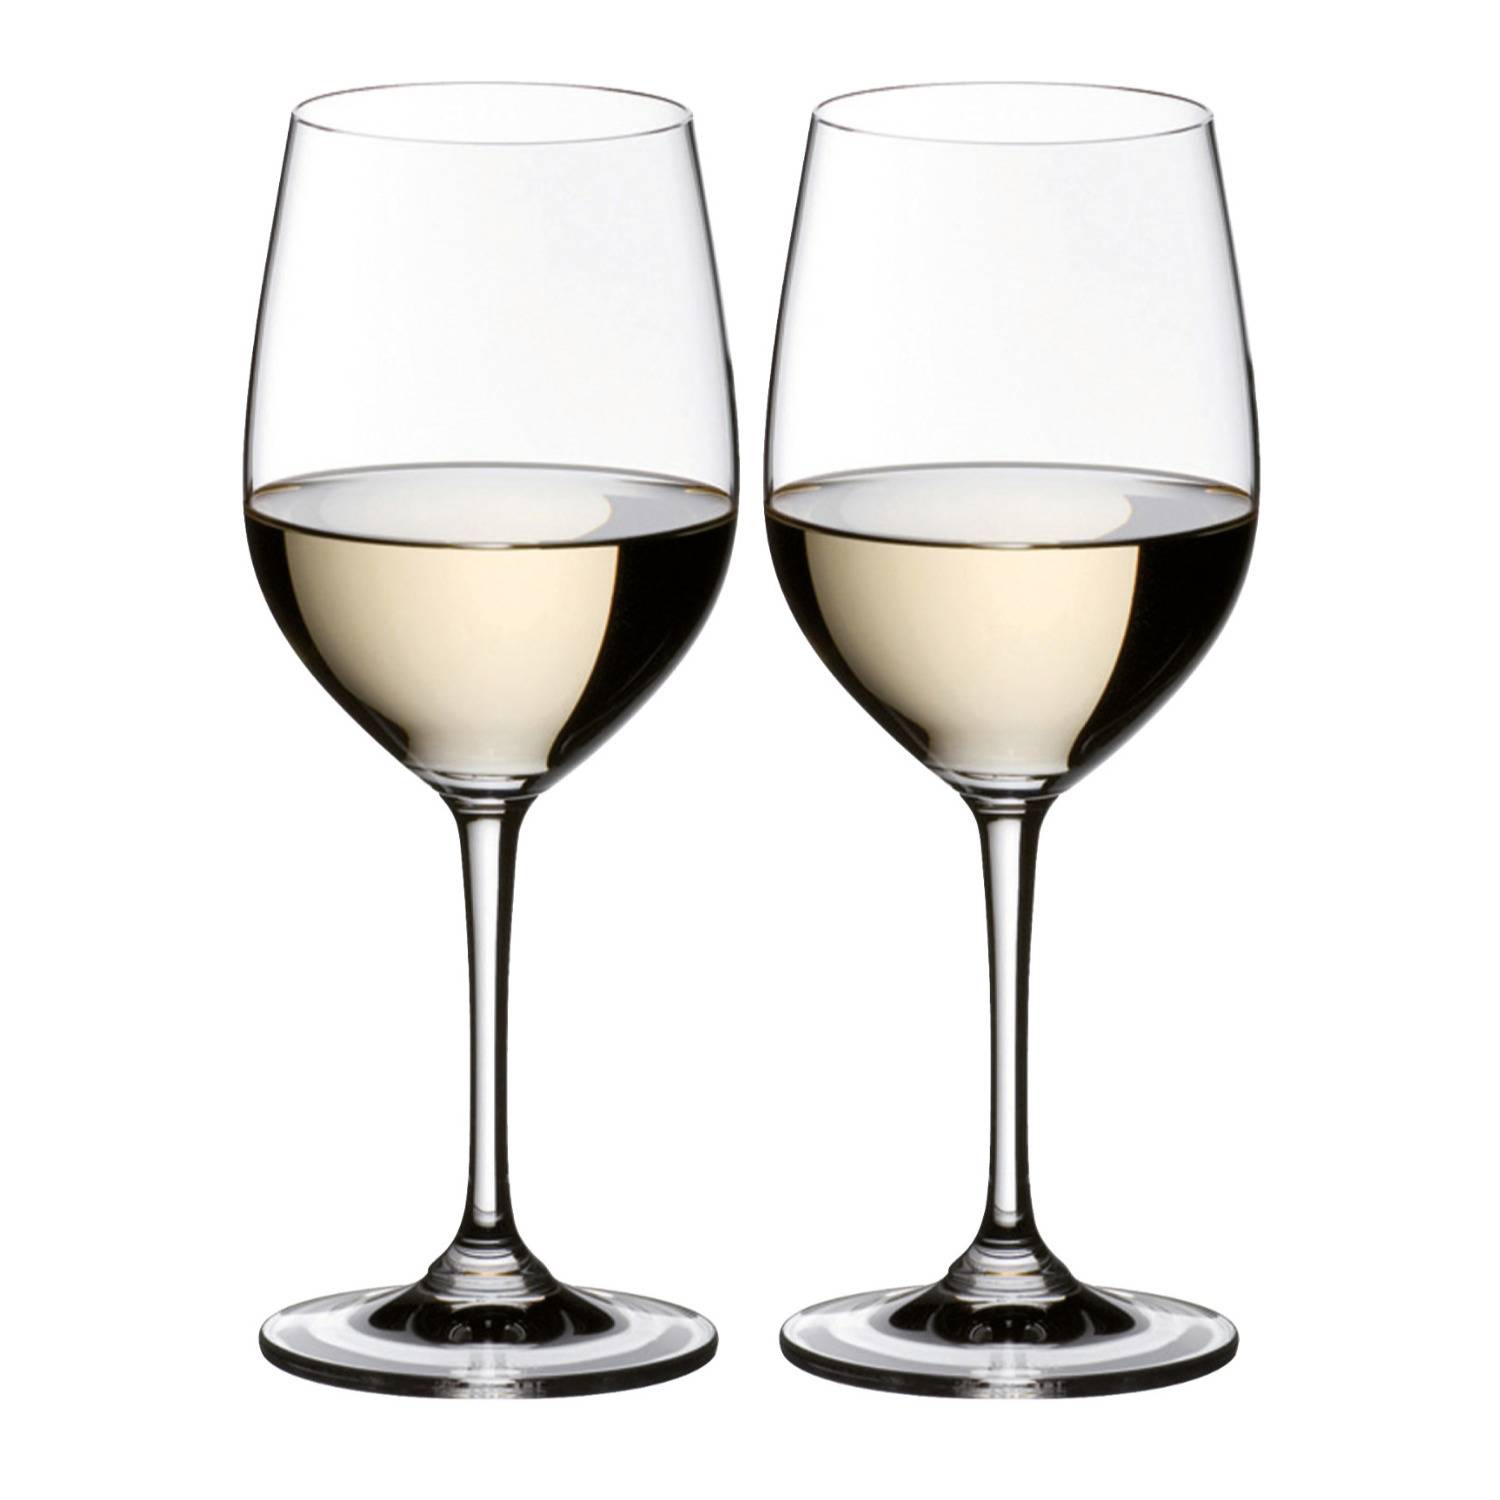 Riedel Vinum Viognier/Chardonnay Glass (Set of 2)